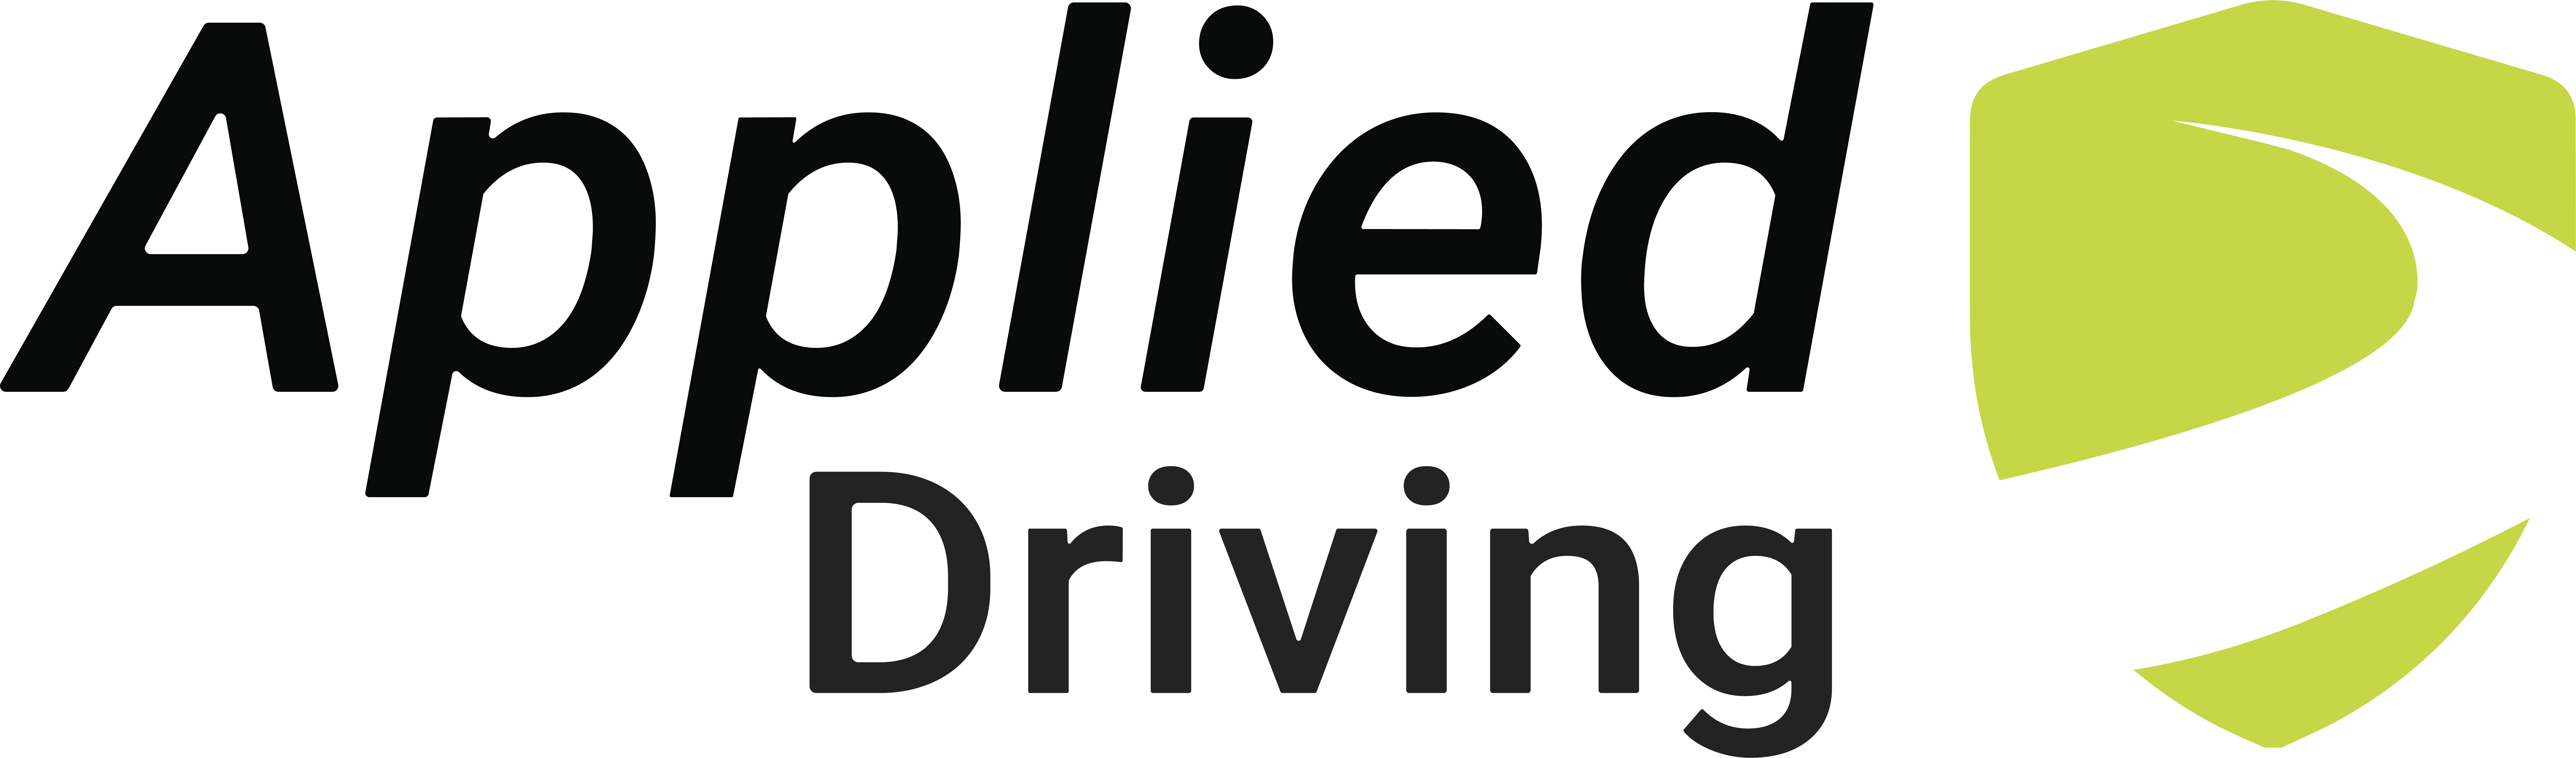 Applied Driving Logo Black